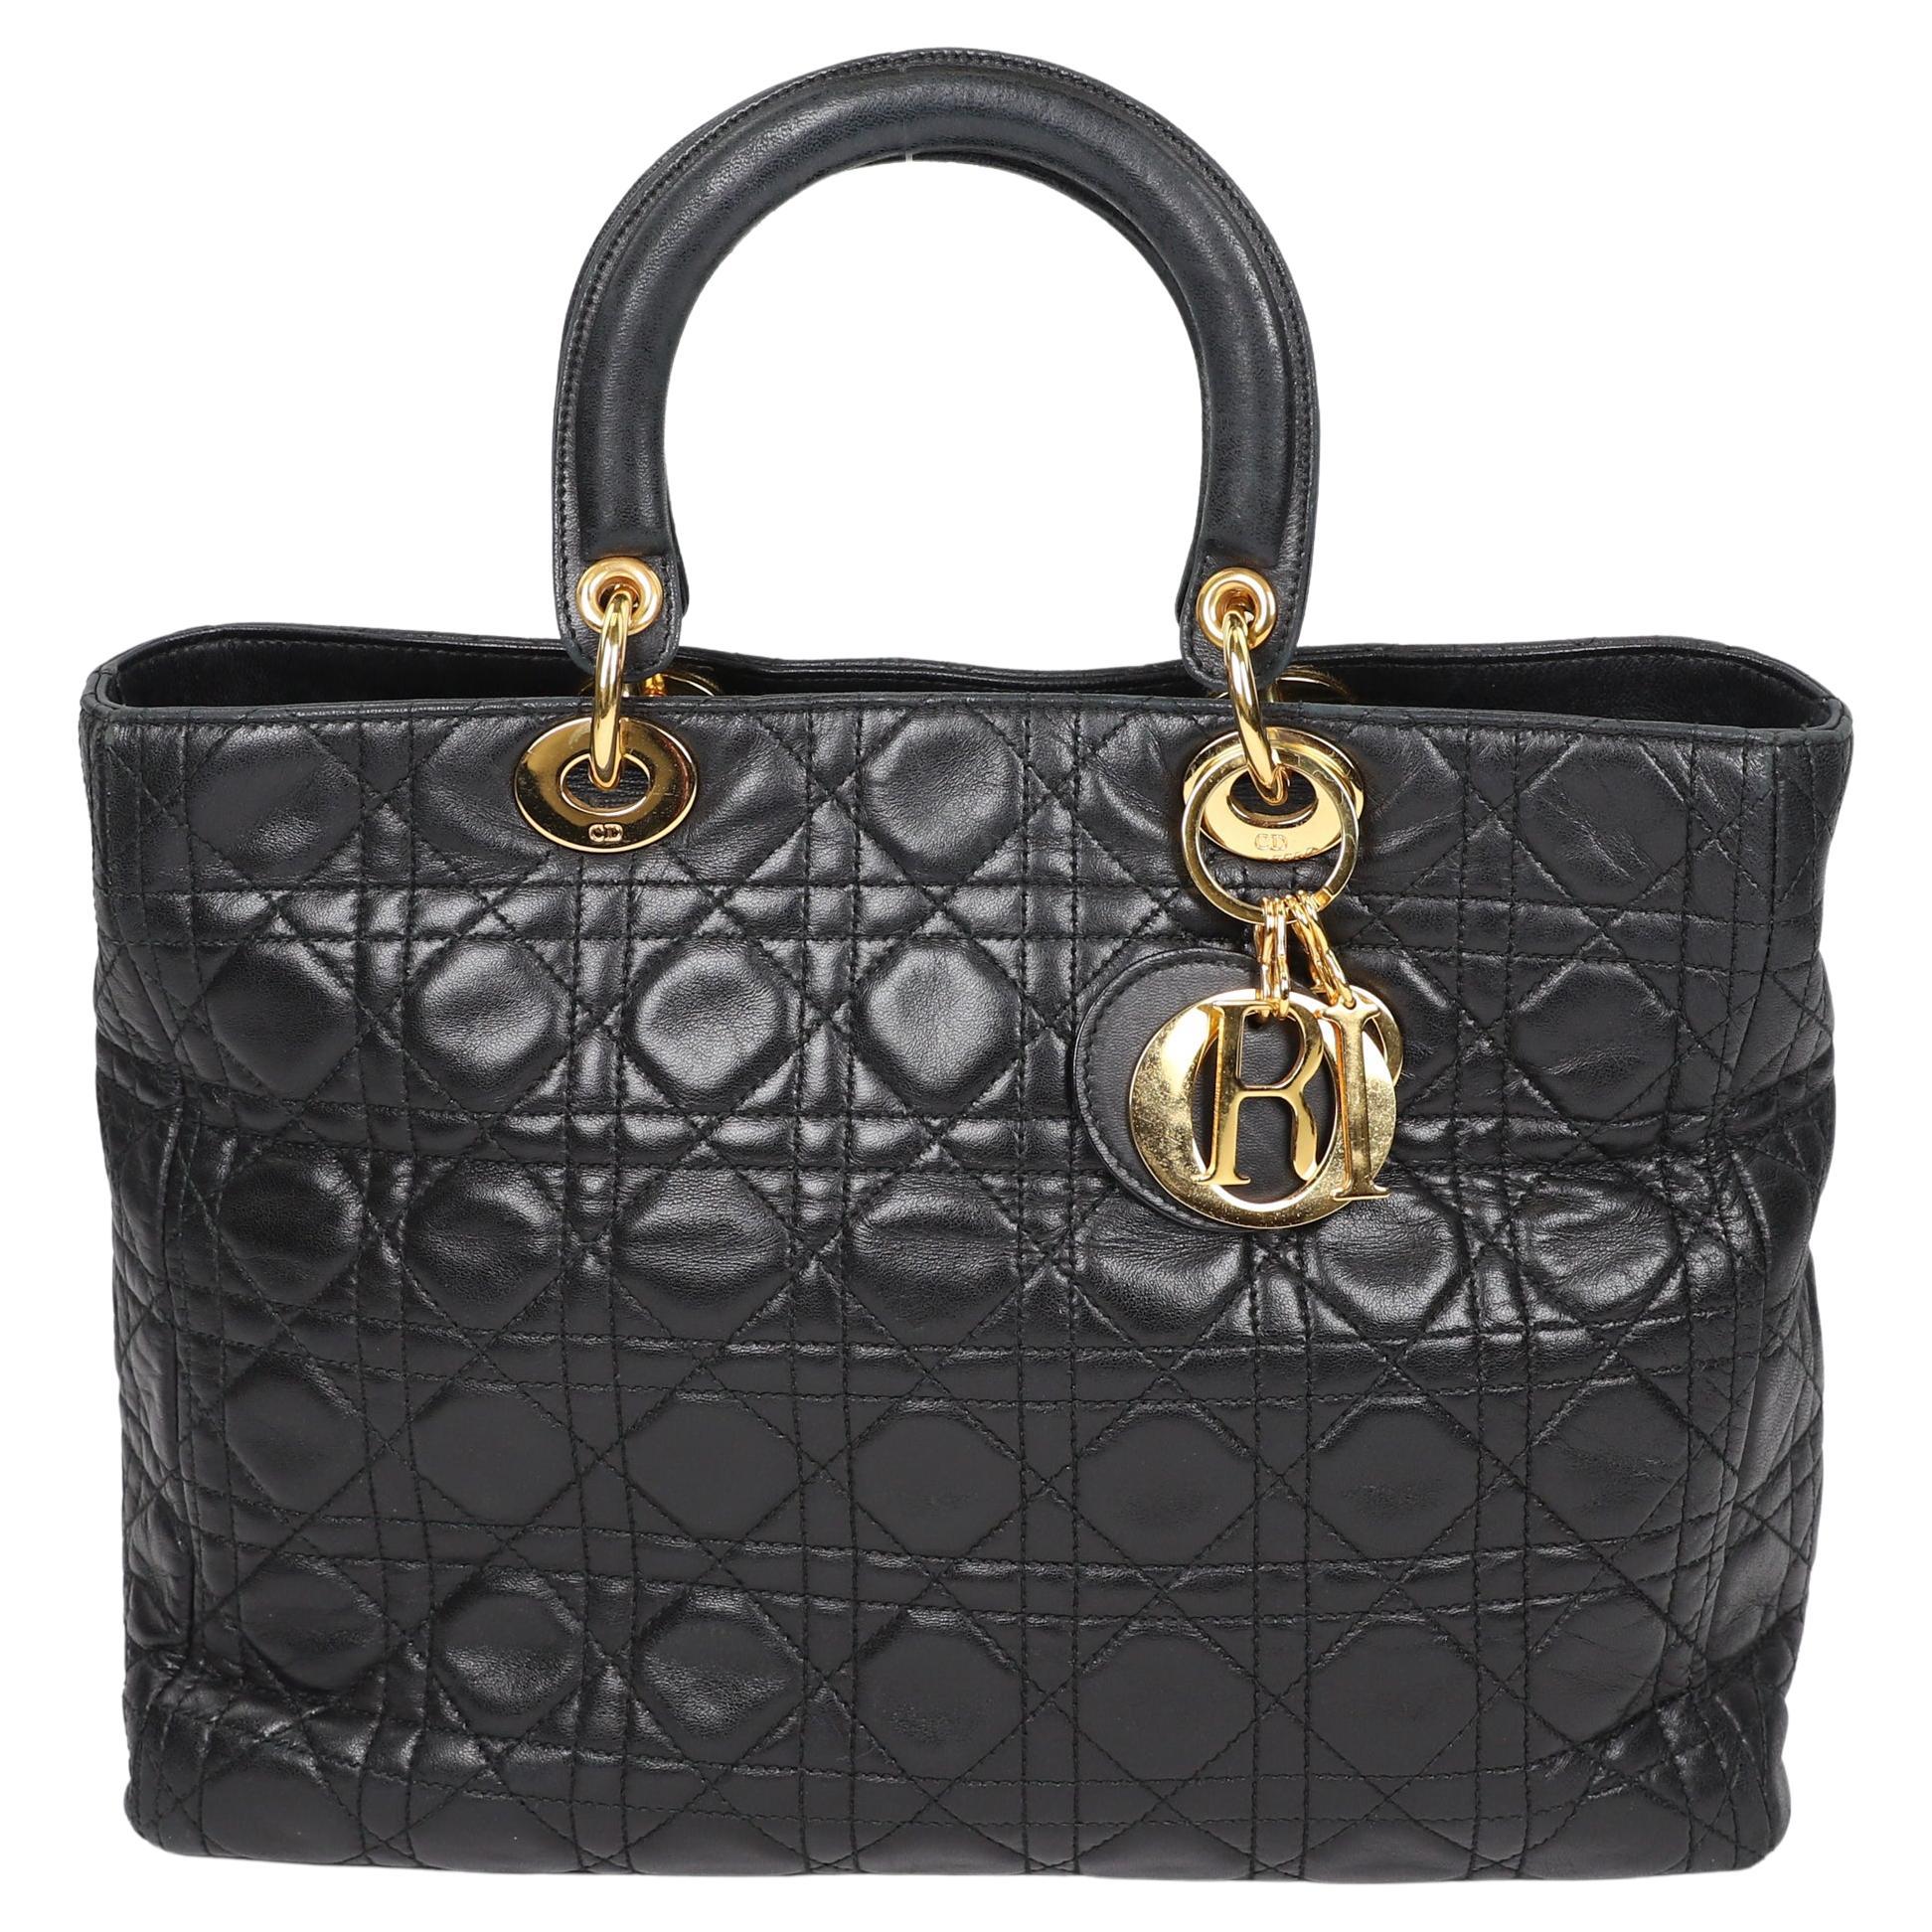 Lady Dior Leather handbag For Sale